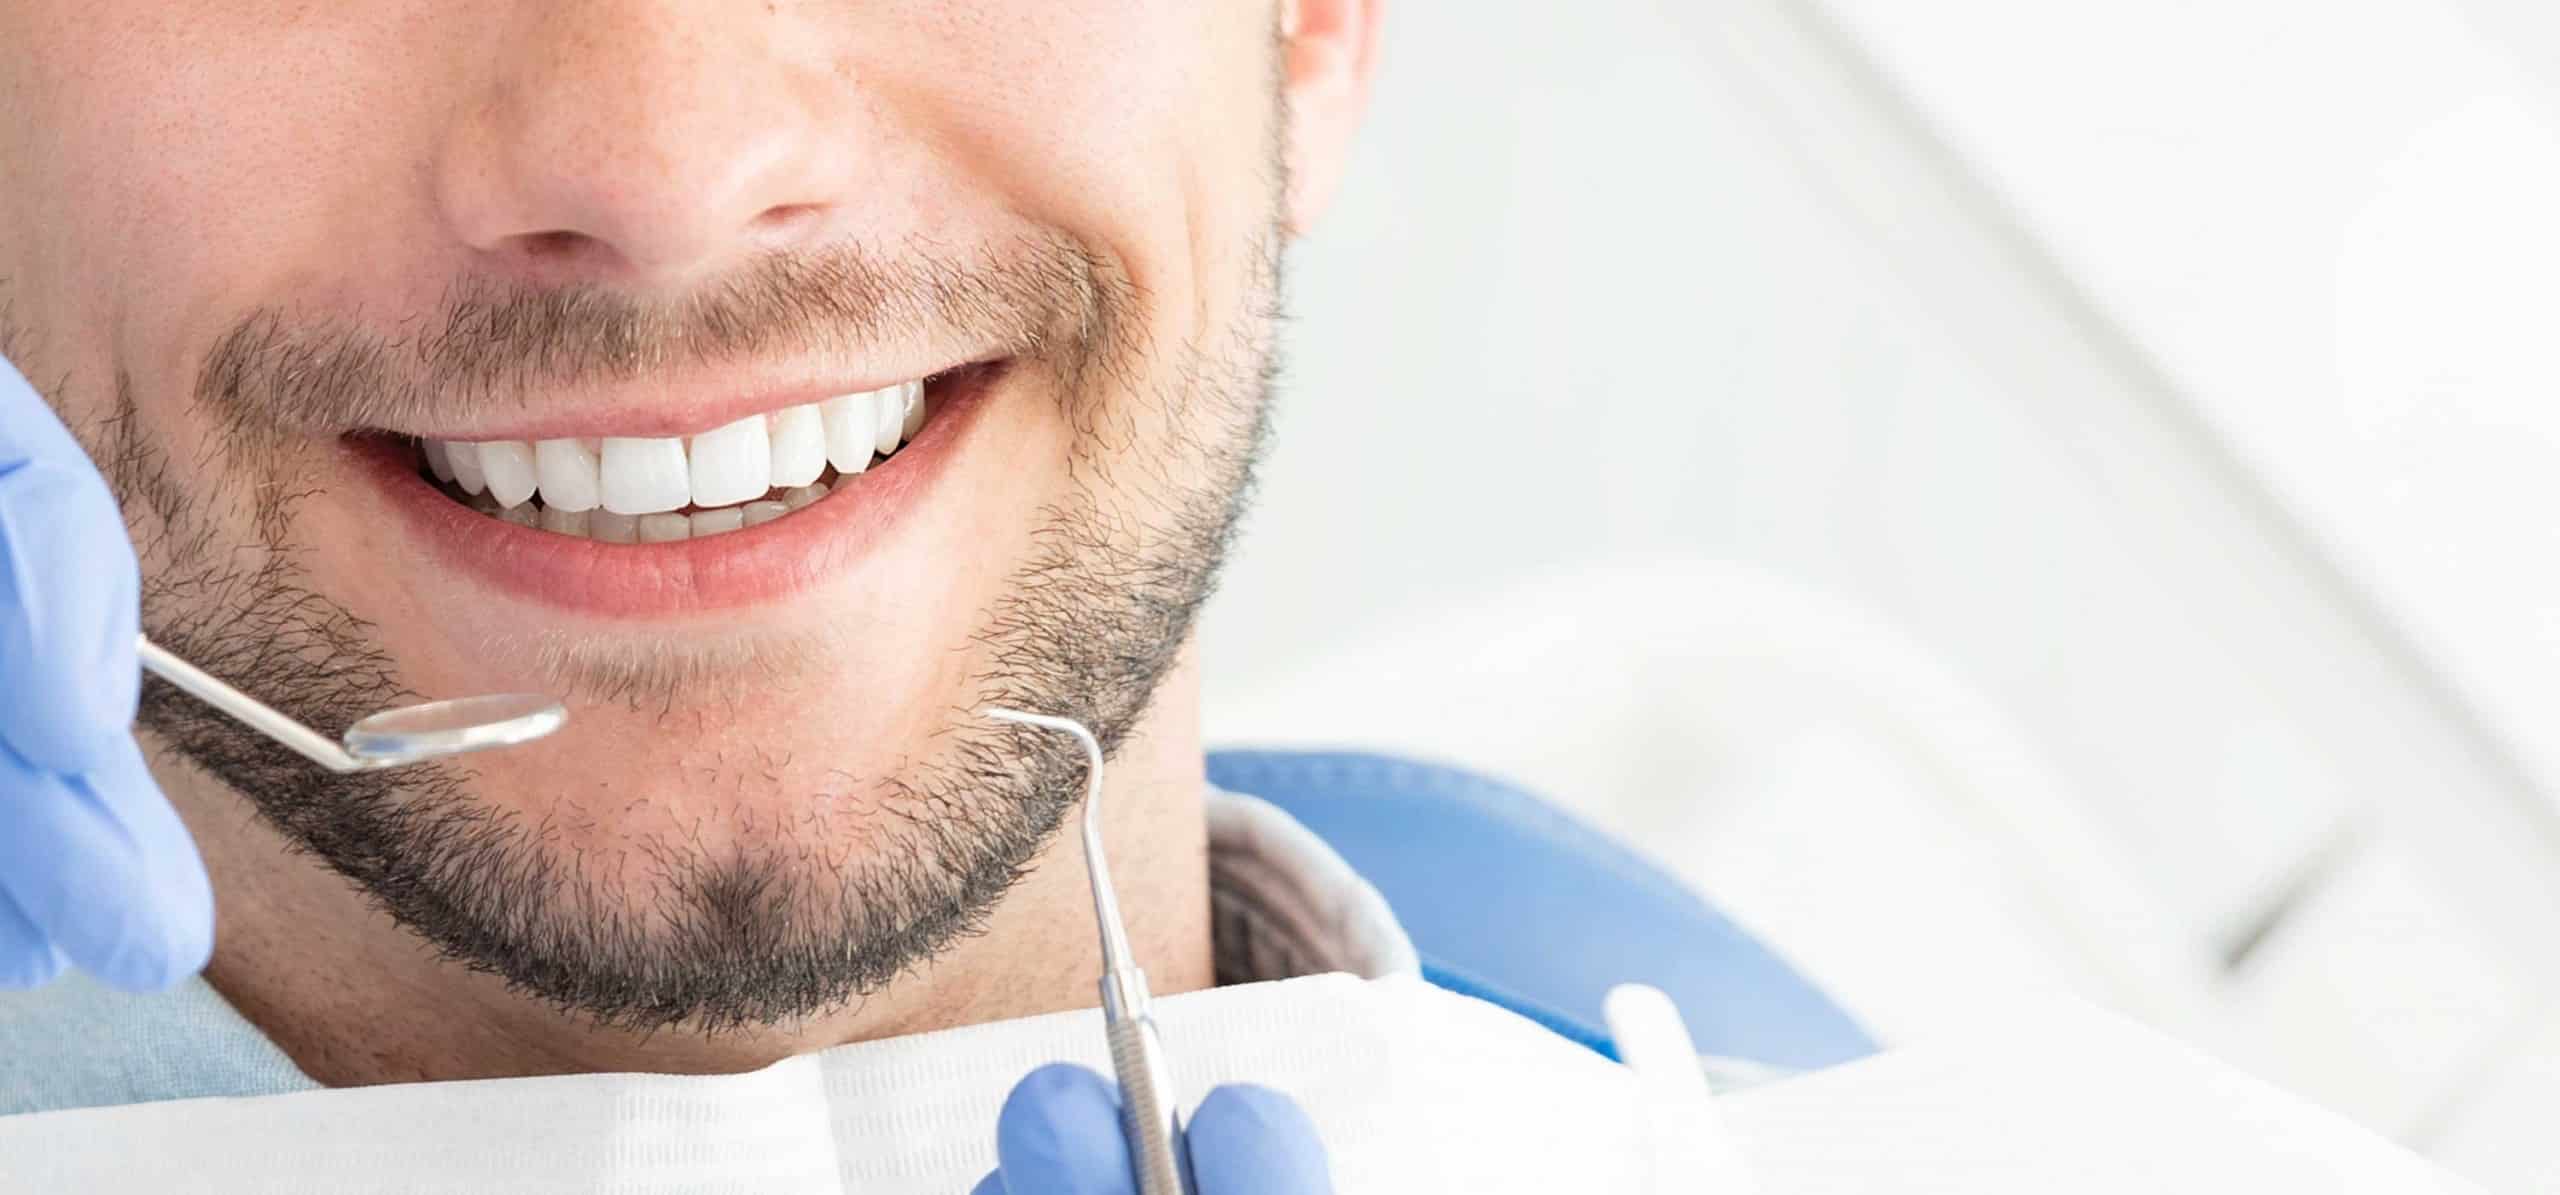 Zahnarzt Zahnarztpraxis Angstpatienten Langenfeld